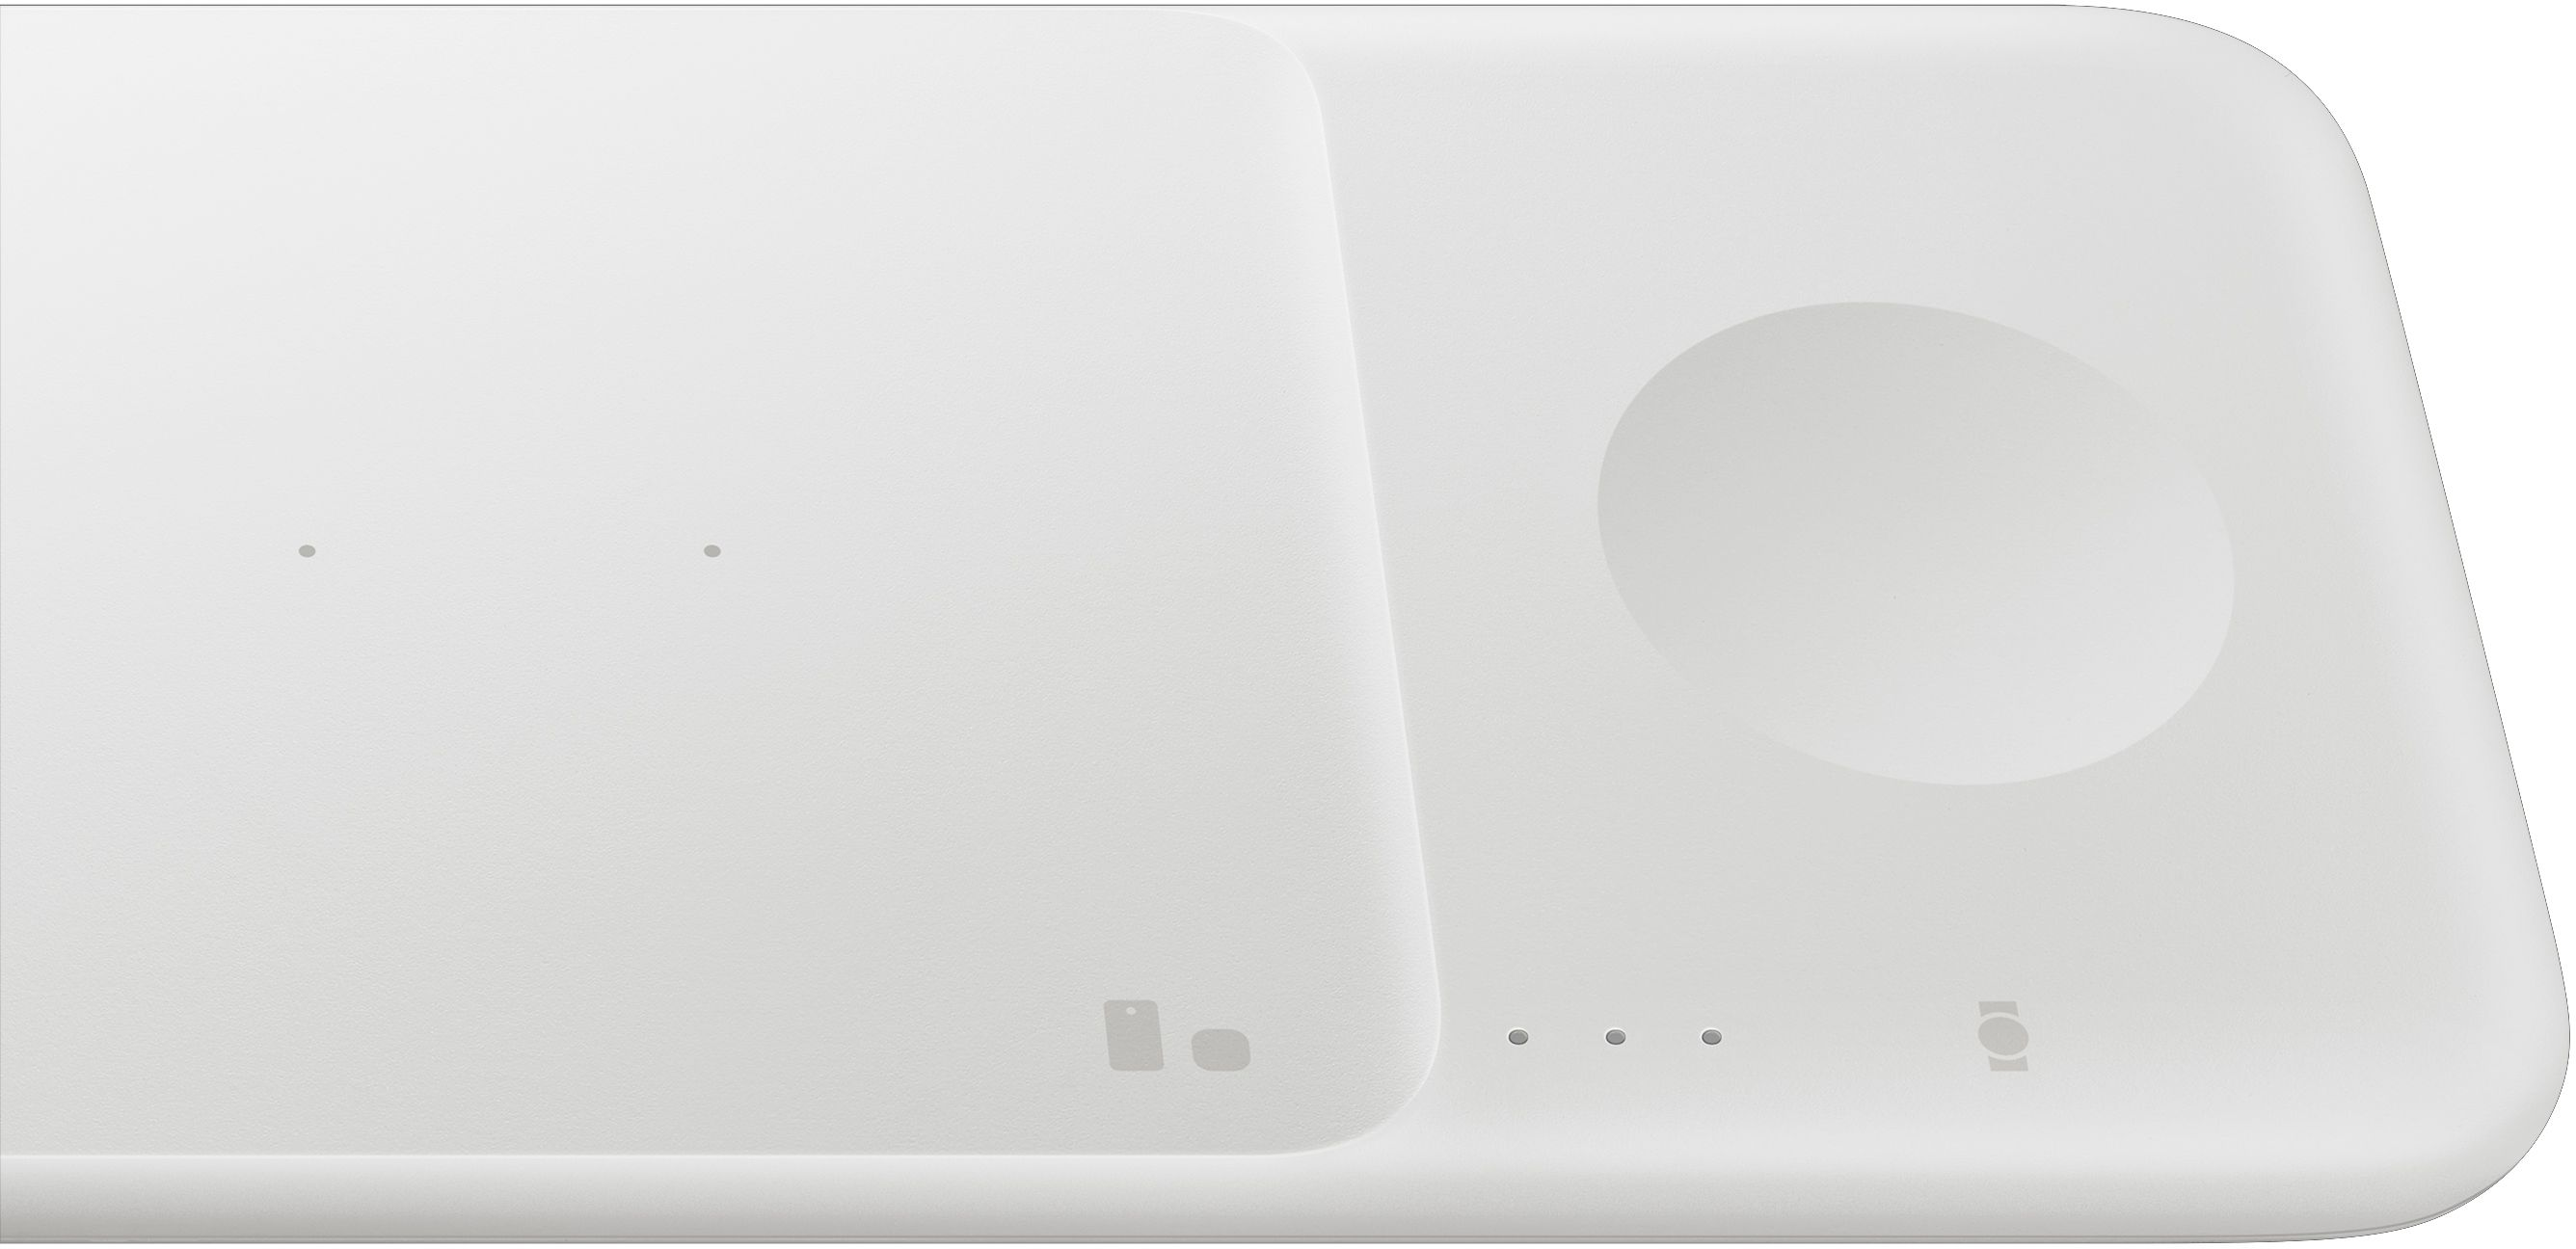 SAMSUNG Wireless Ladegerät Trio Pad & Ladegeräte Apple, Weiß Kabel - Weiß